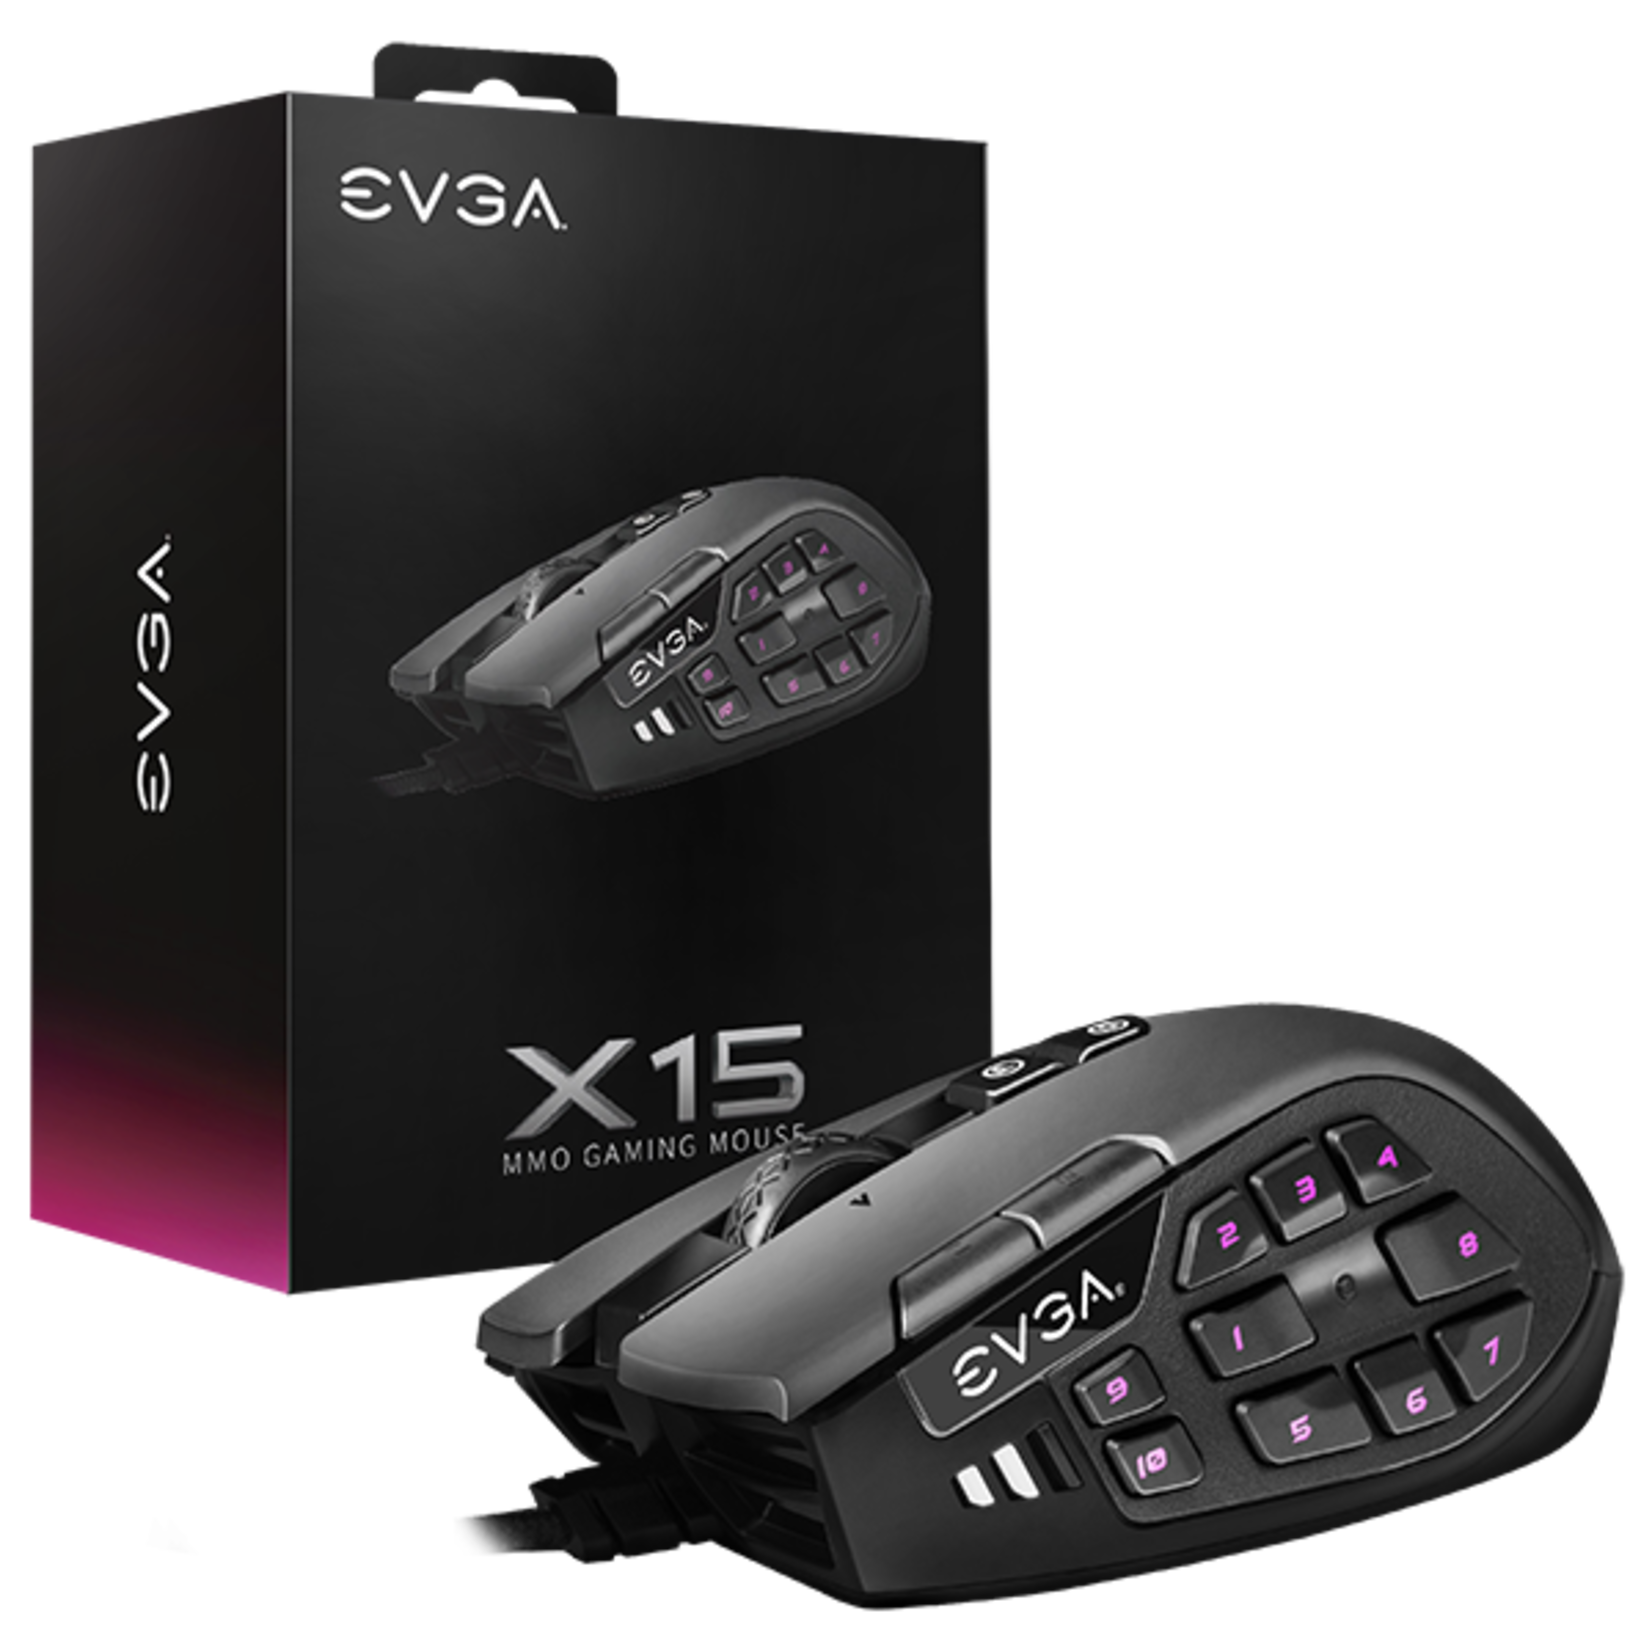 EVGA EVGA X15 20 Button MMO Gaming Mouse